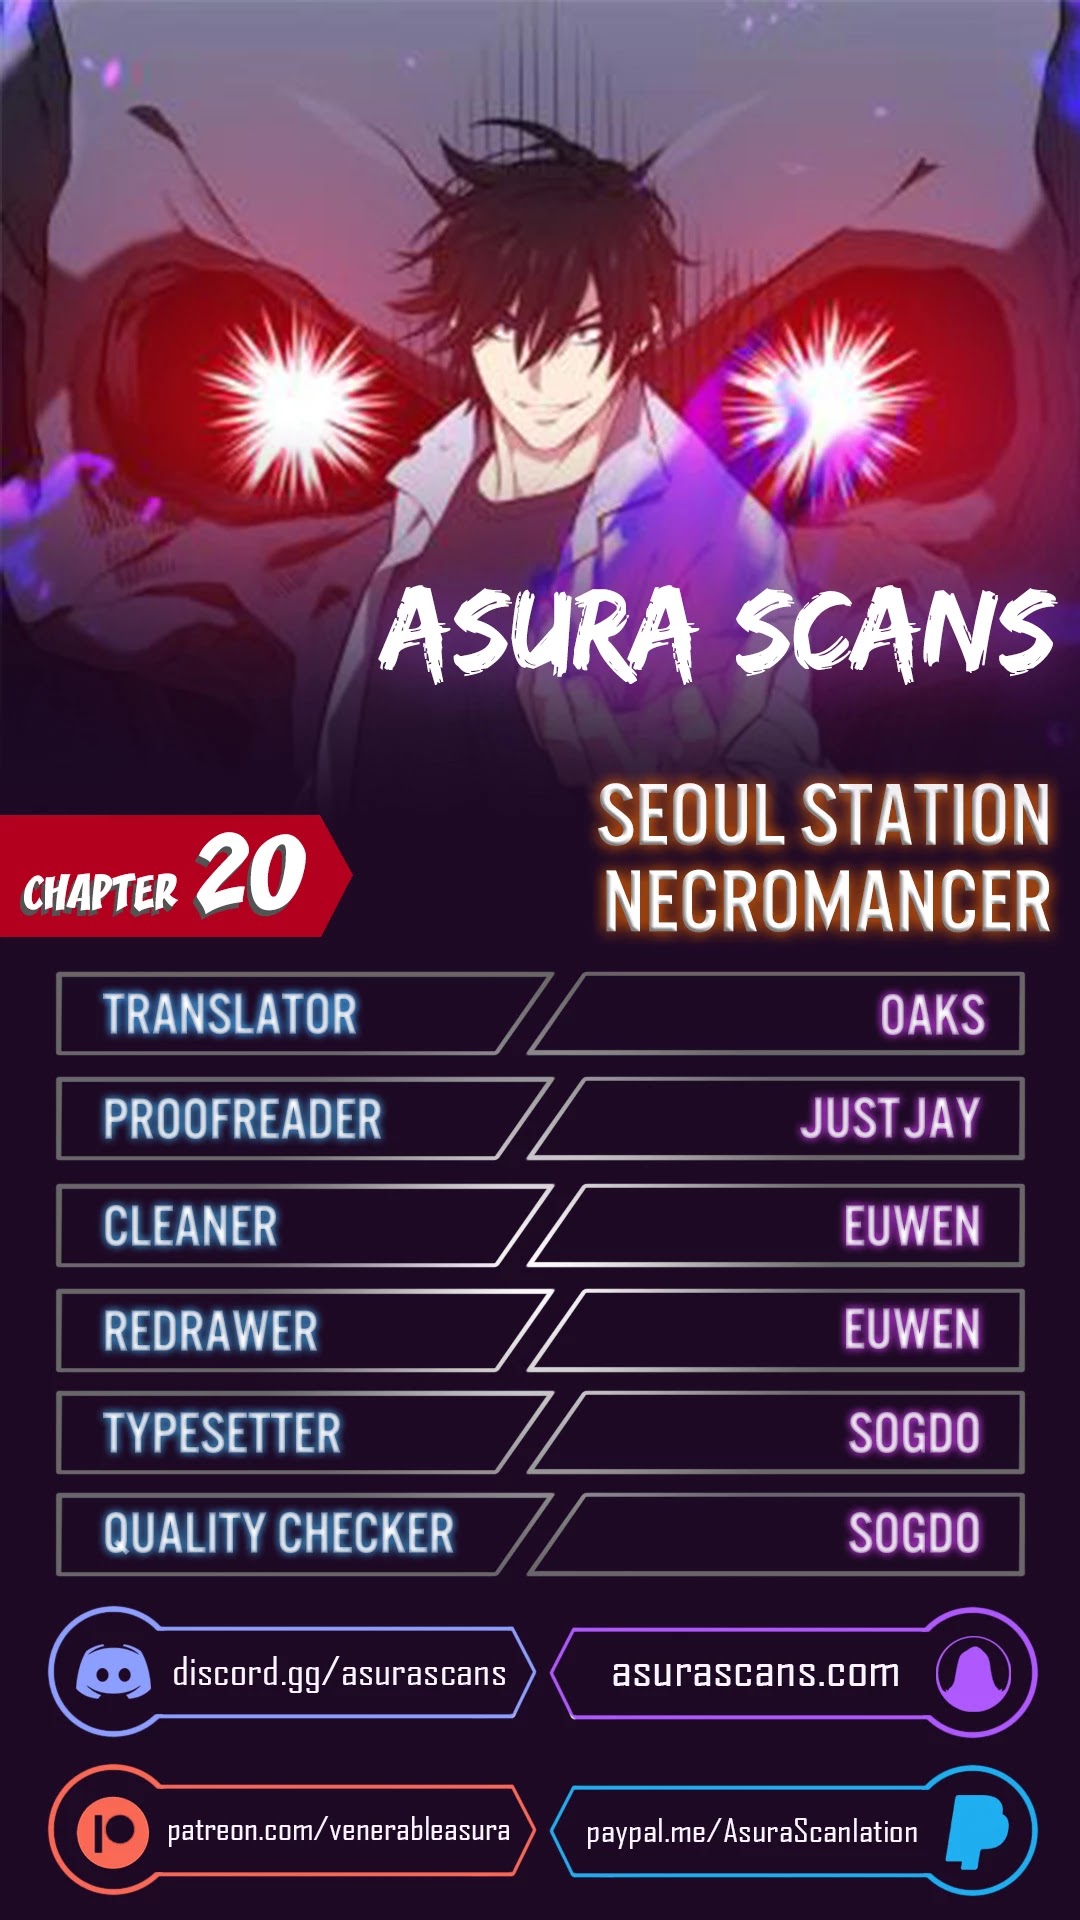 Seoul Station's Necromancer Chapter 20